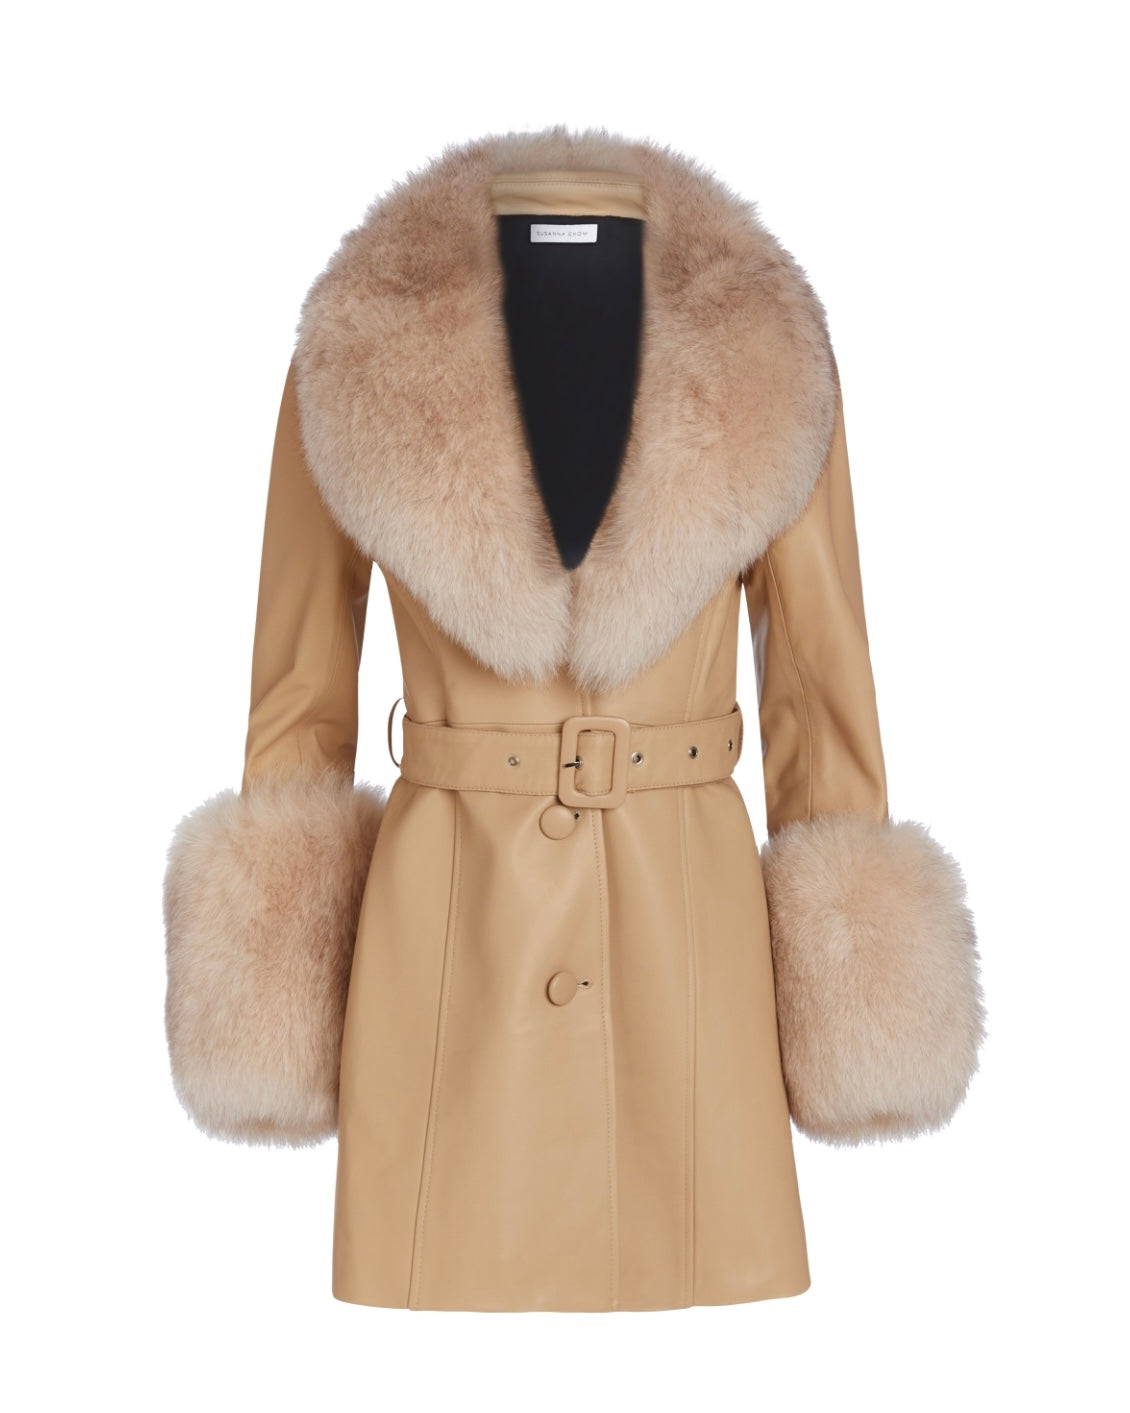 Roxy Fur Coat